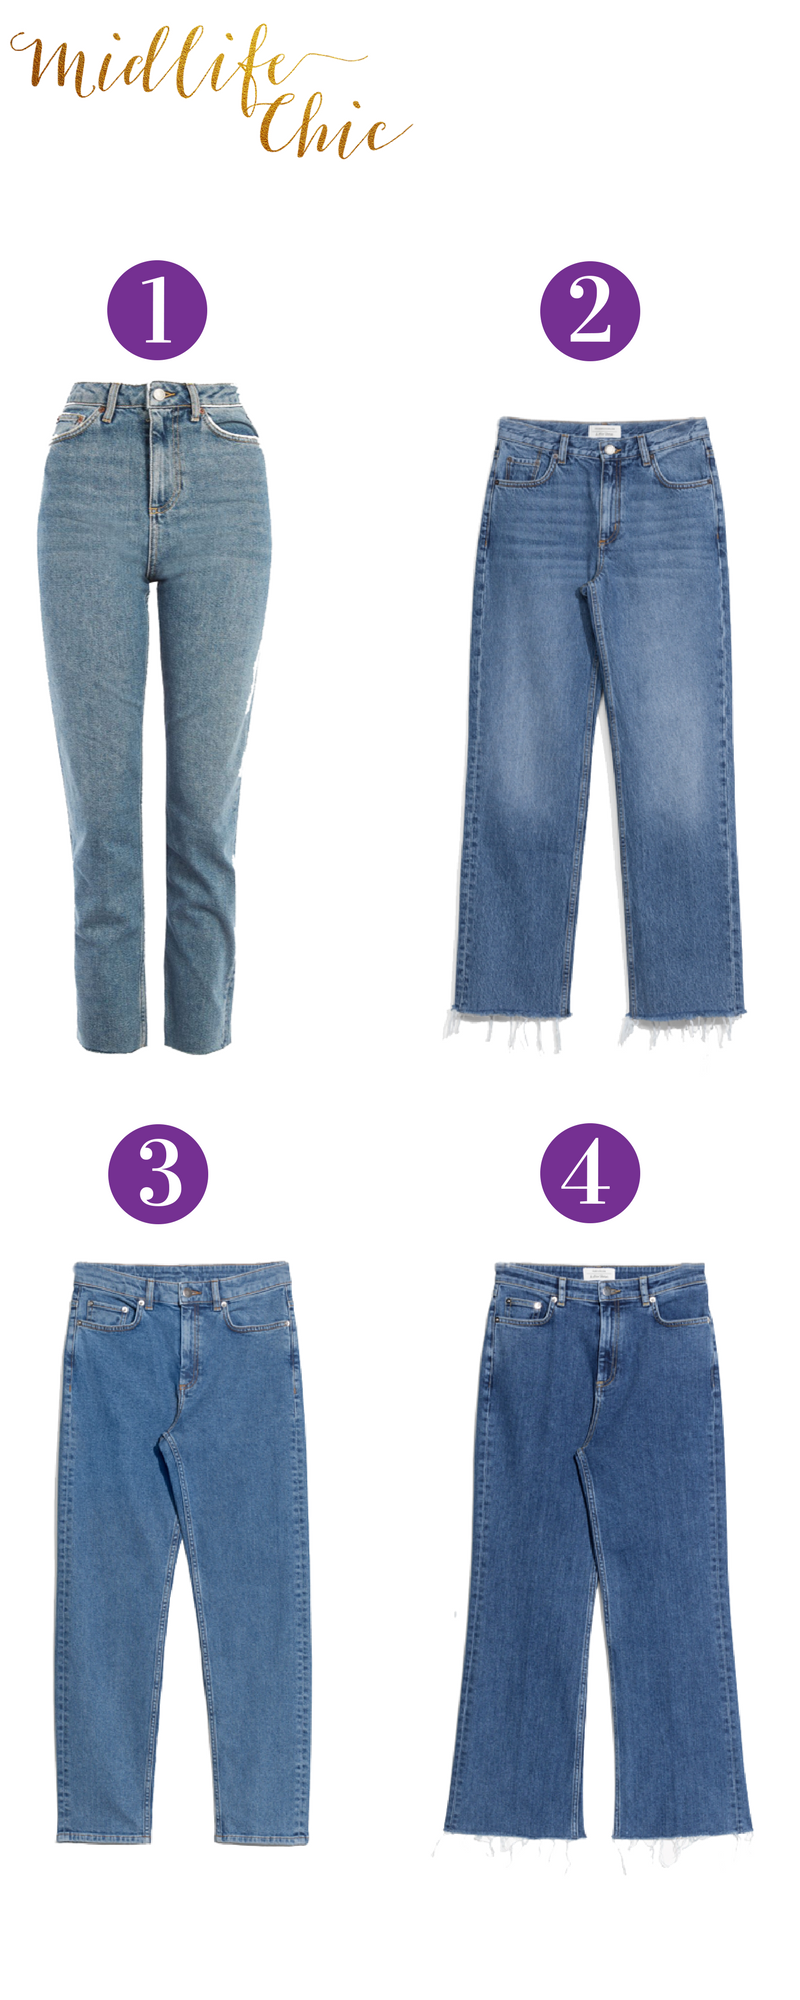 Casual basics - Spring / Summer 18 jeans - Midlifechic